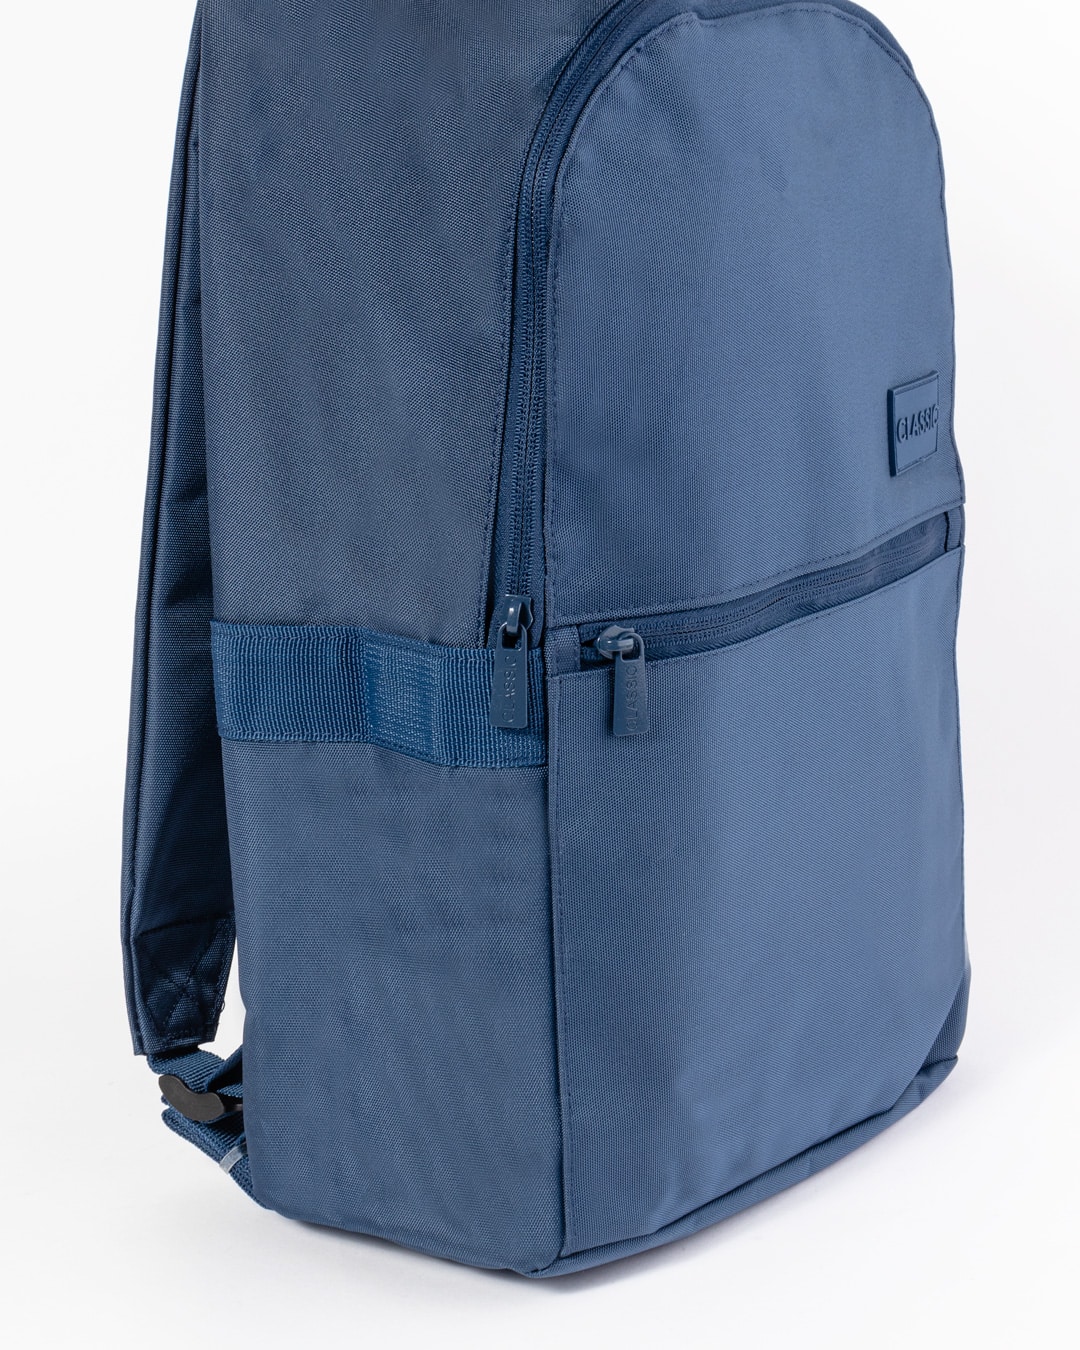 blue bookbag